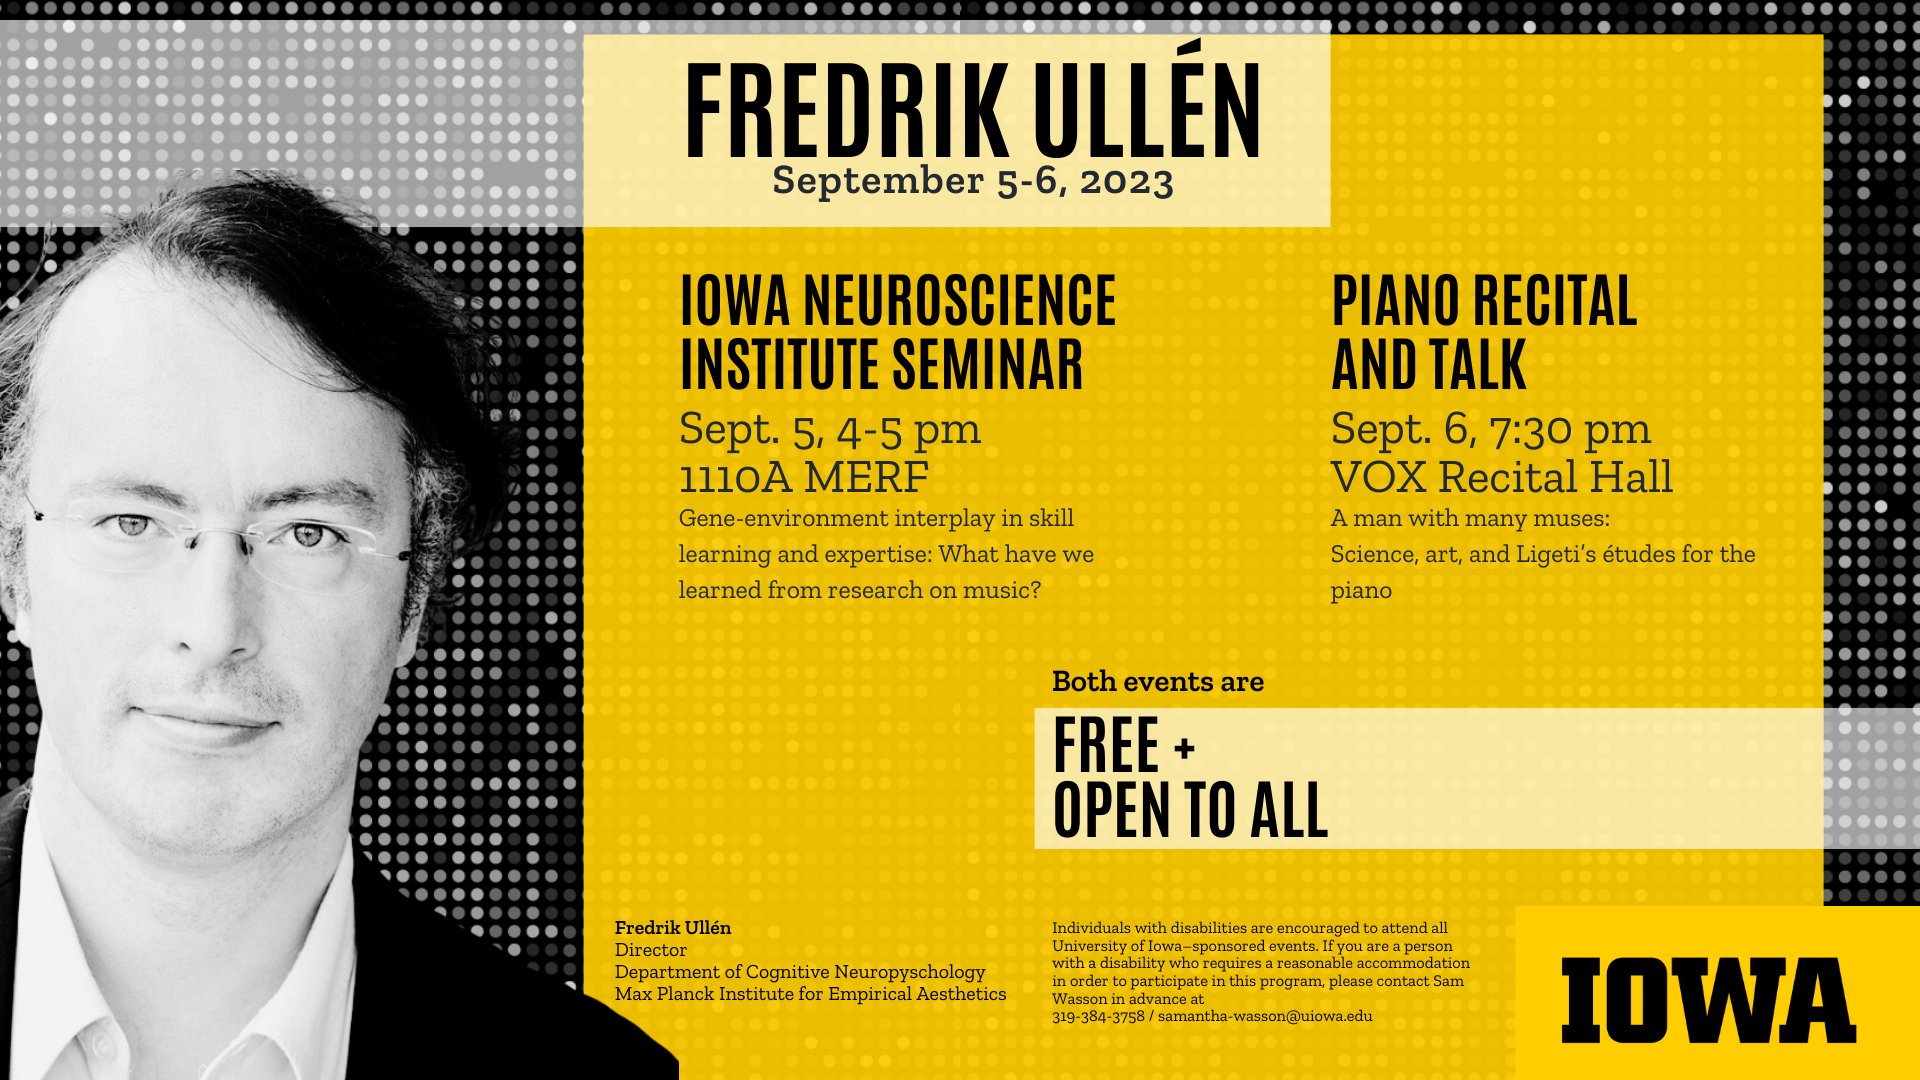 Fredrik Ullen Neuroscience seminar Sept 5 and Piano recital Sept 6